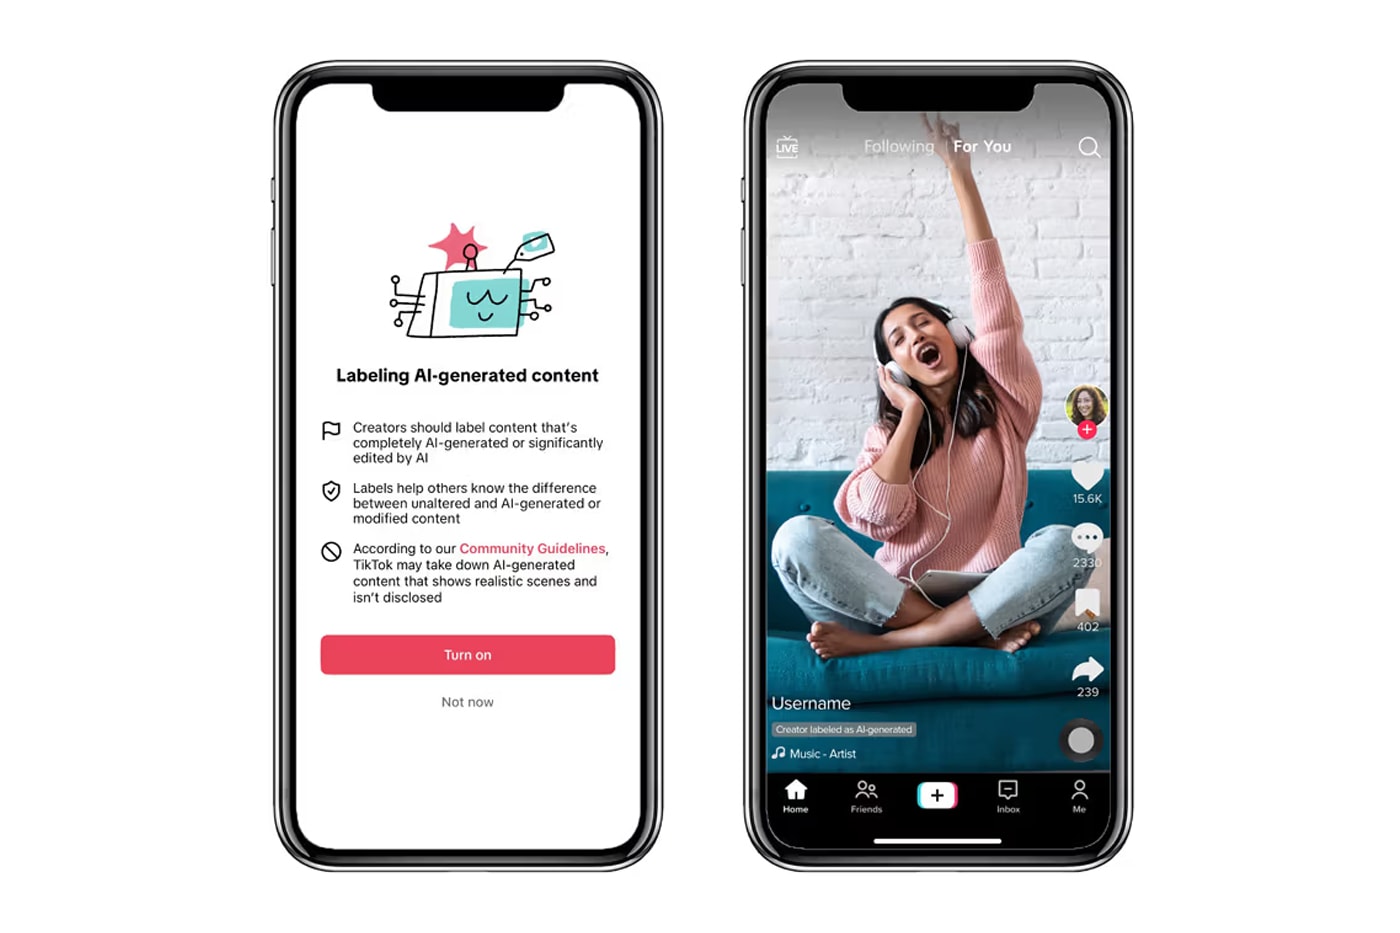 tiktok creators users social platform ai artificial intelligence label generated content new feature launch details realistic photo video audio